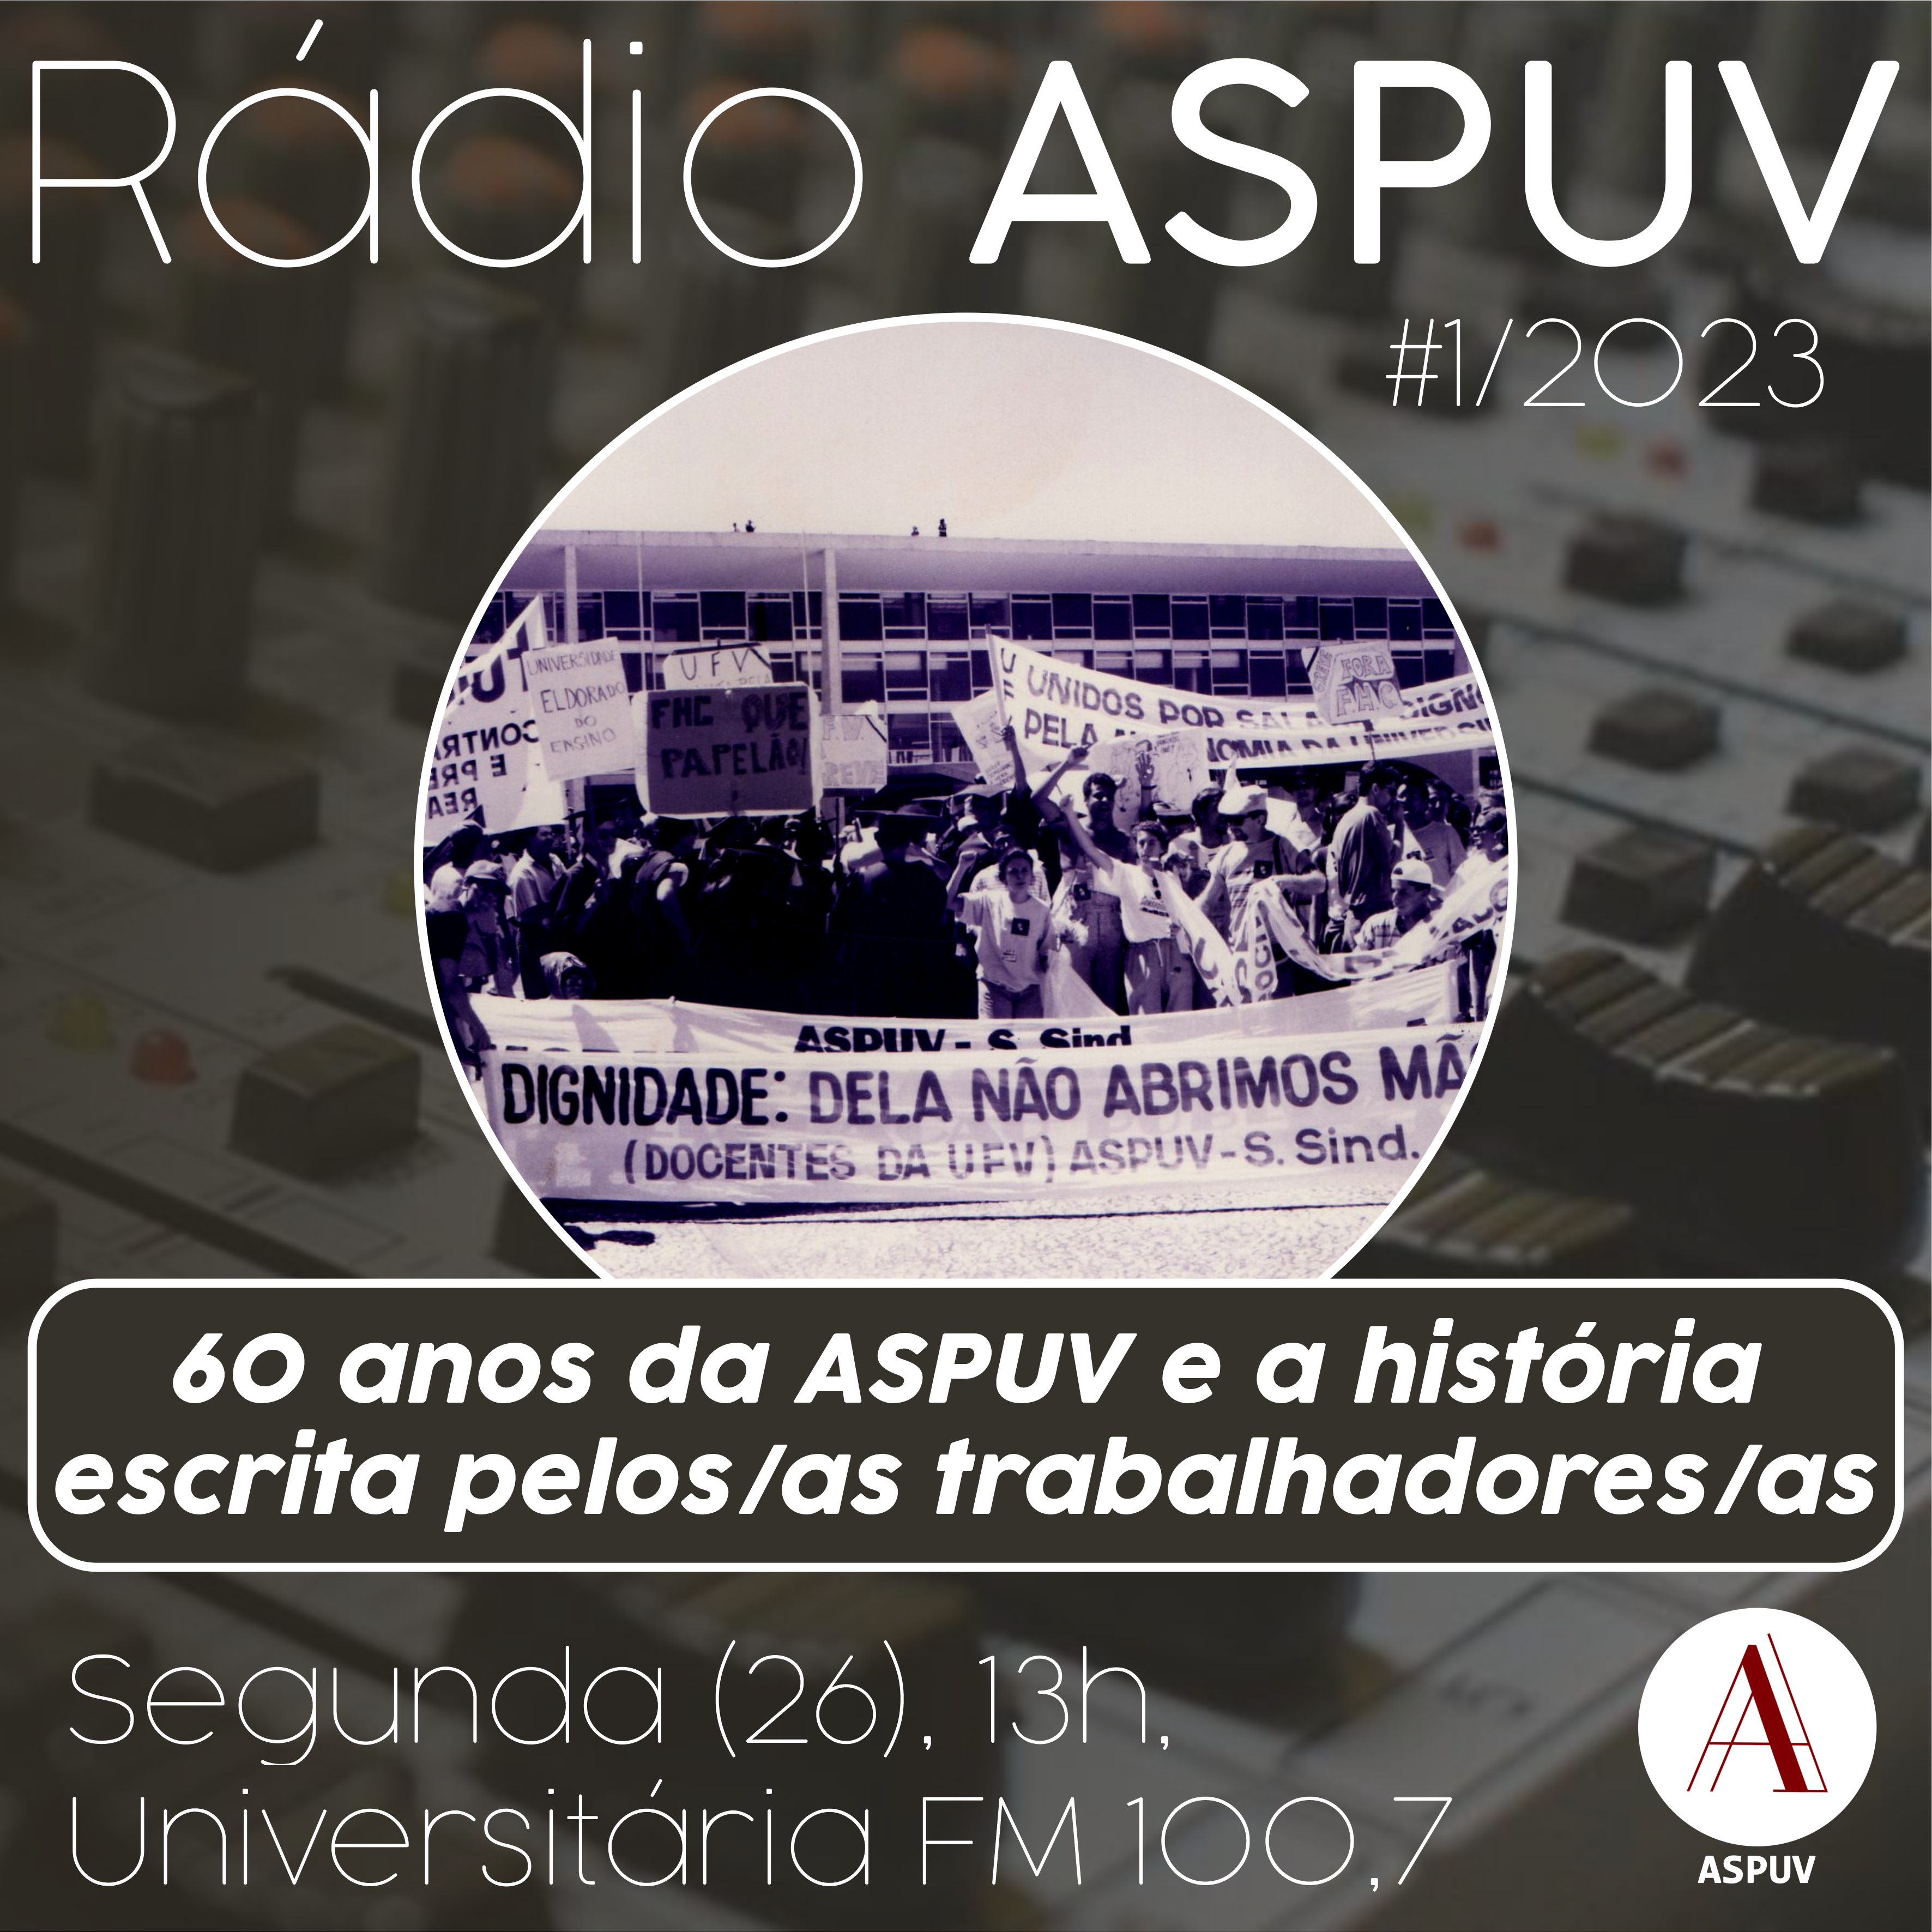 Rádio ASPUV #1/2023 – 60 anos da ASPUV